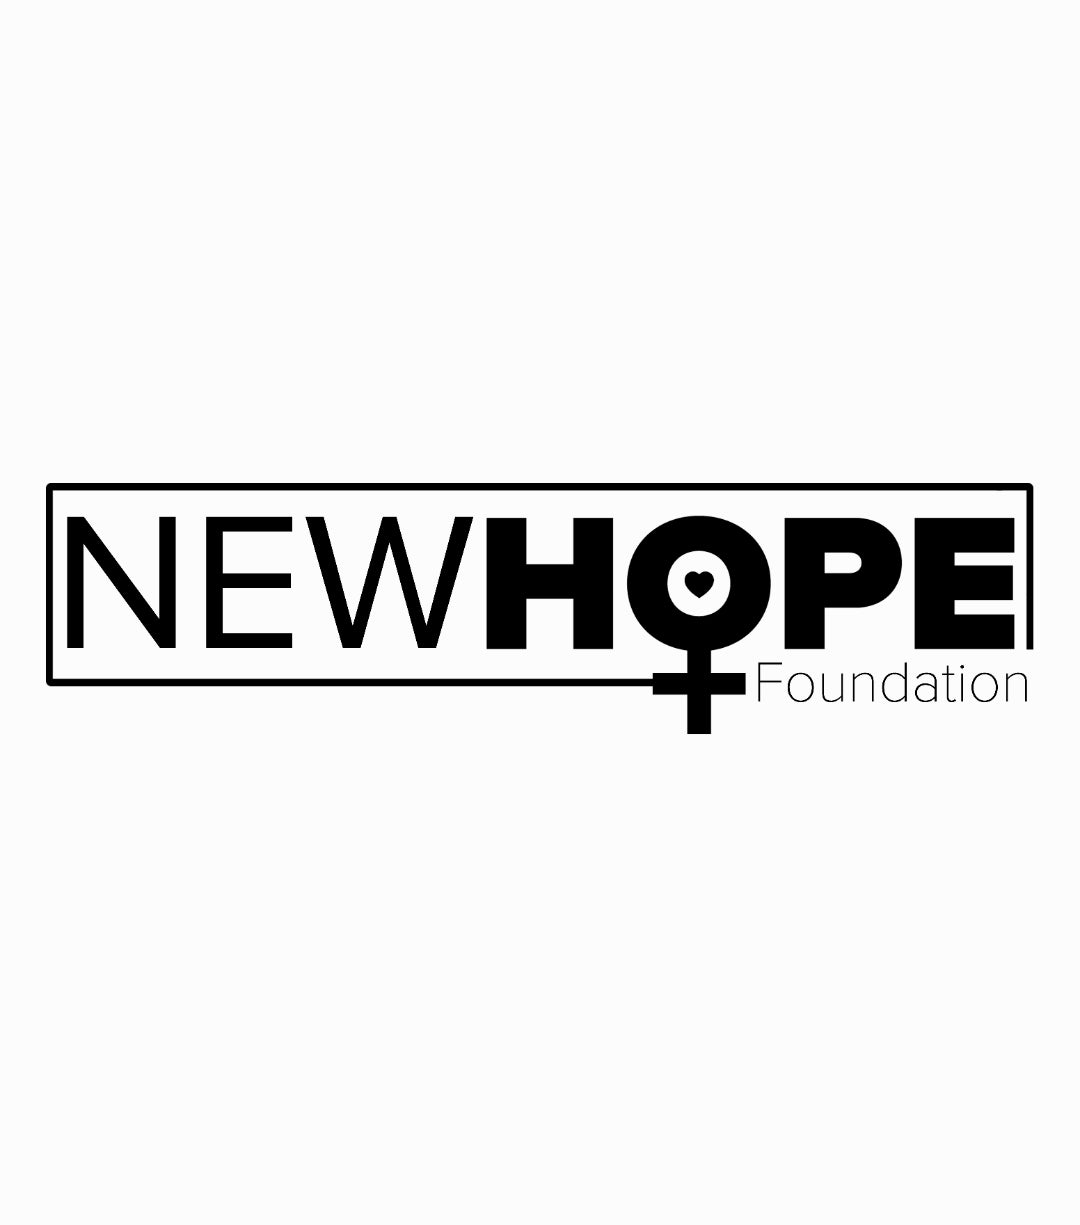 New Hope Foundation Fundraiser